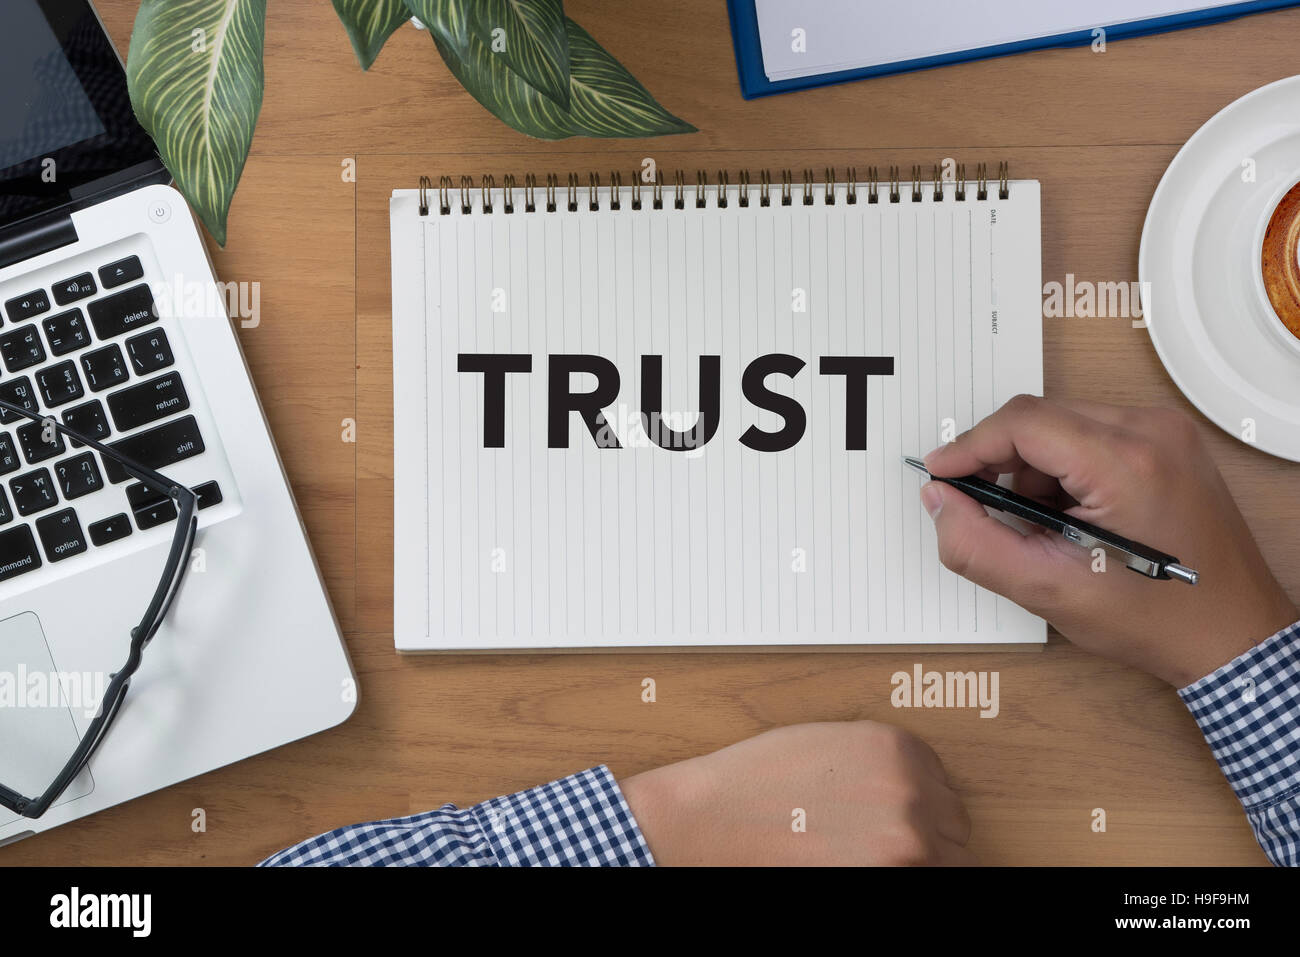 Trust - Business Concept Stock Photo